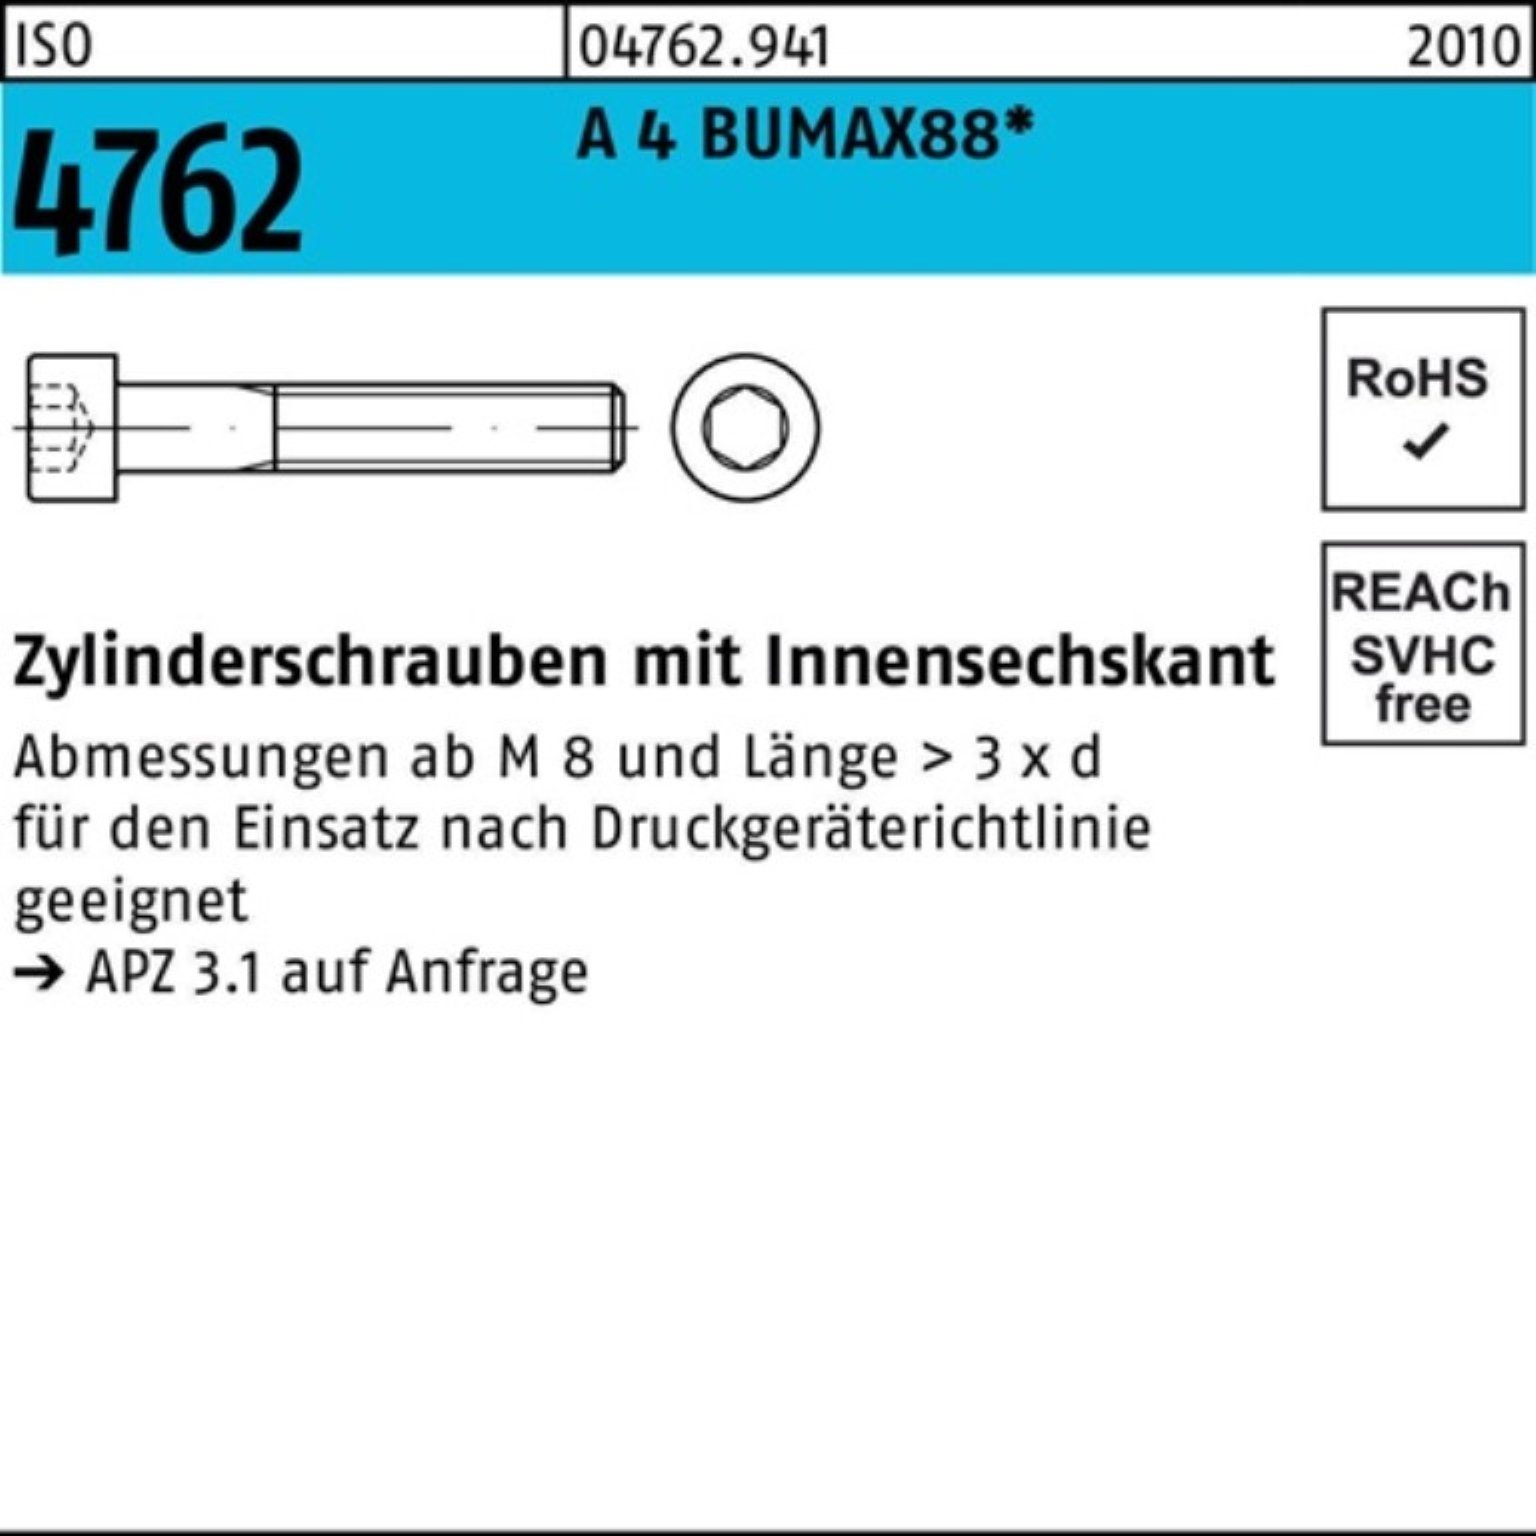 Bufab Zylinderschraube 100er Pack Zylinderschraube ISO 4762 Innen-6kt M6x 12 A 4 BUMAX88 100